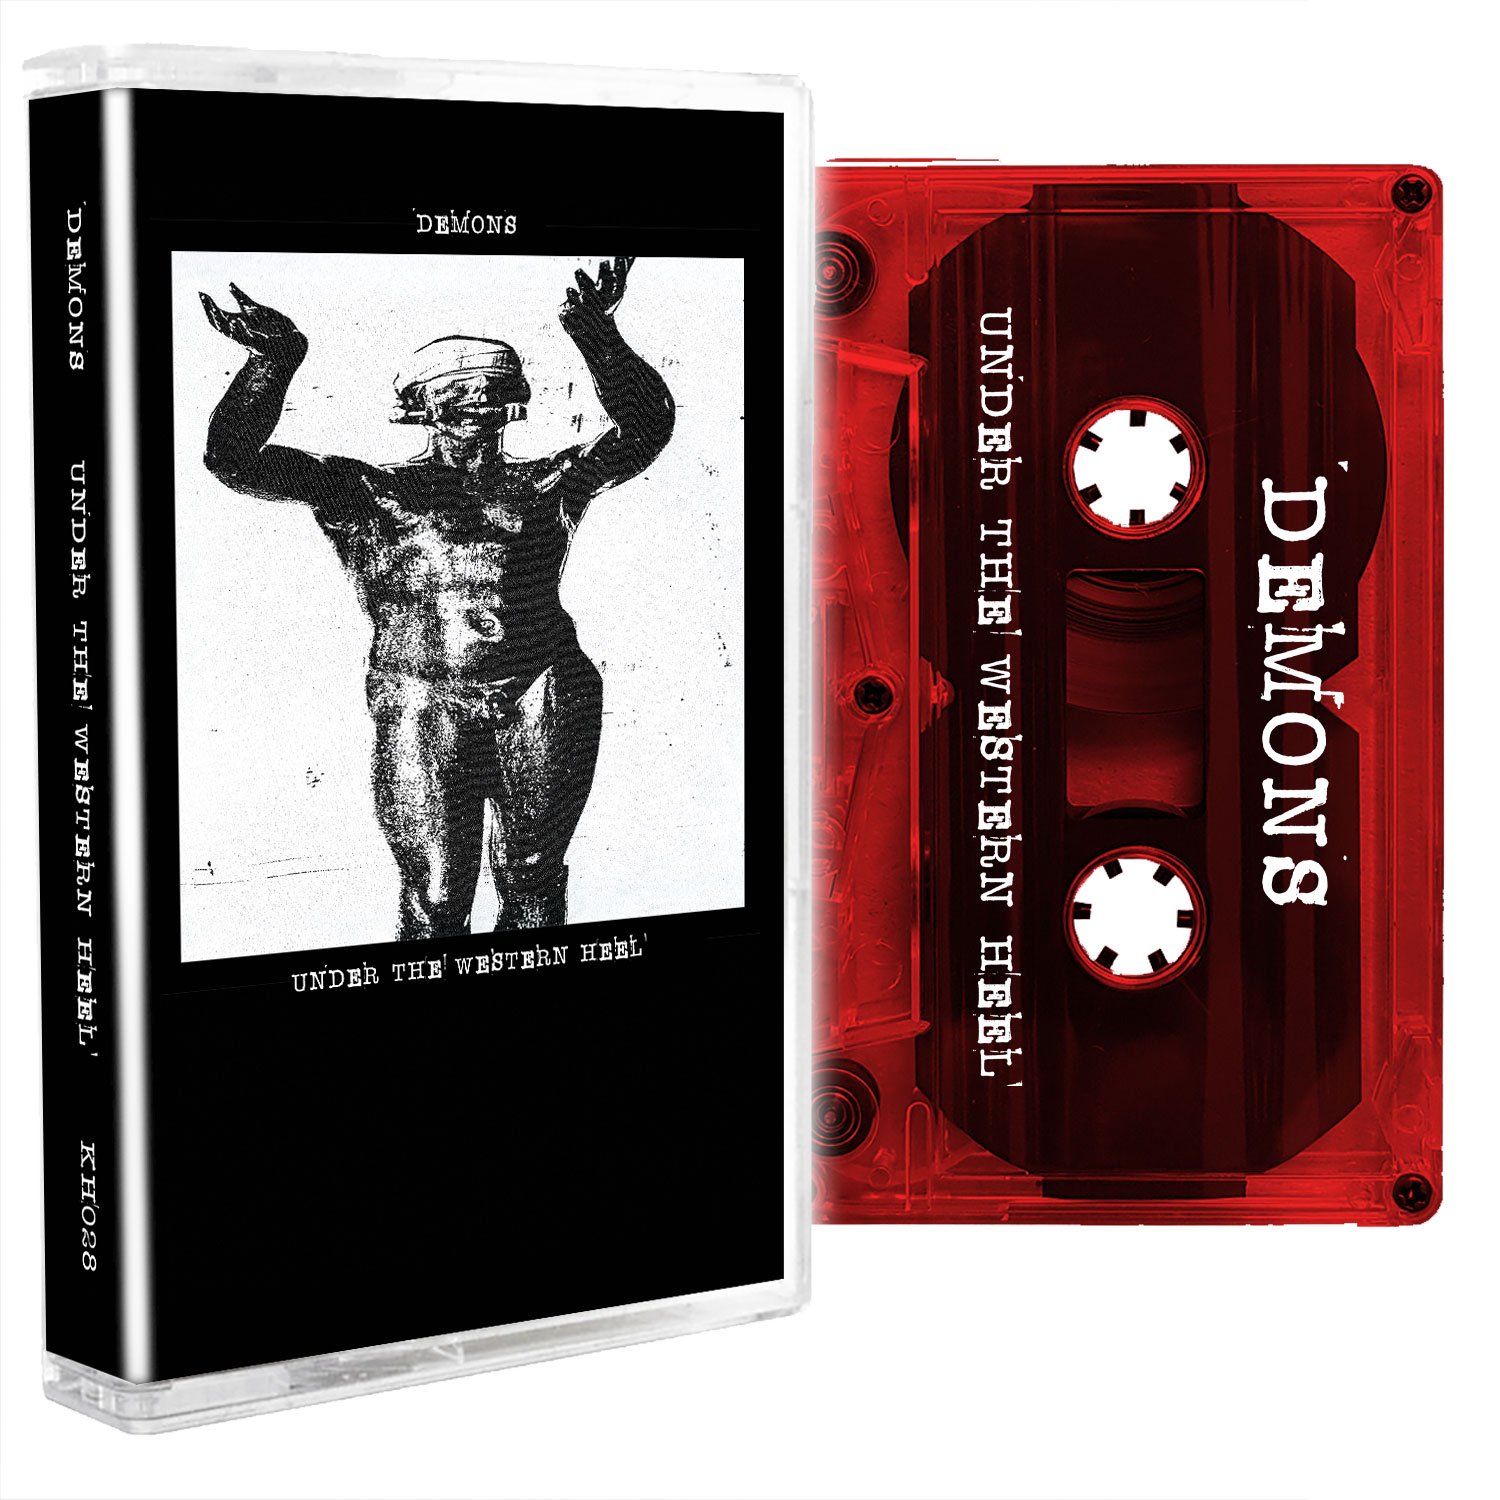 Demons - Under The Western Heel cassette